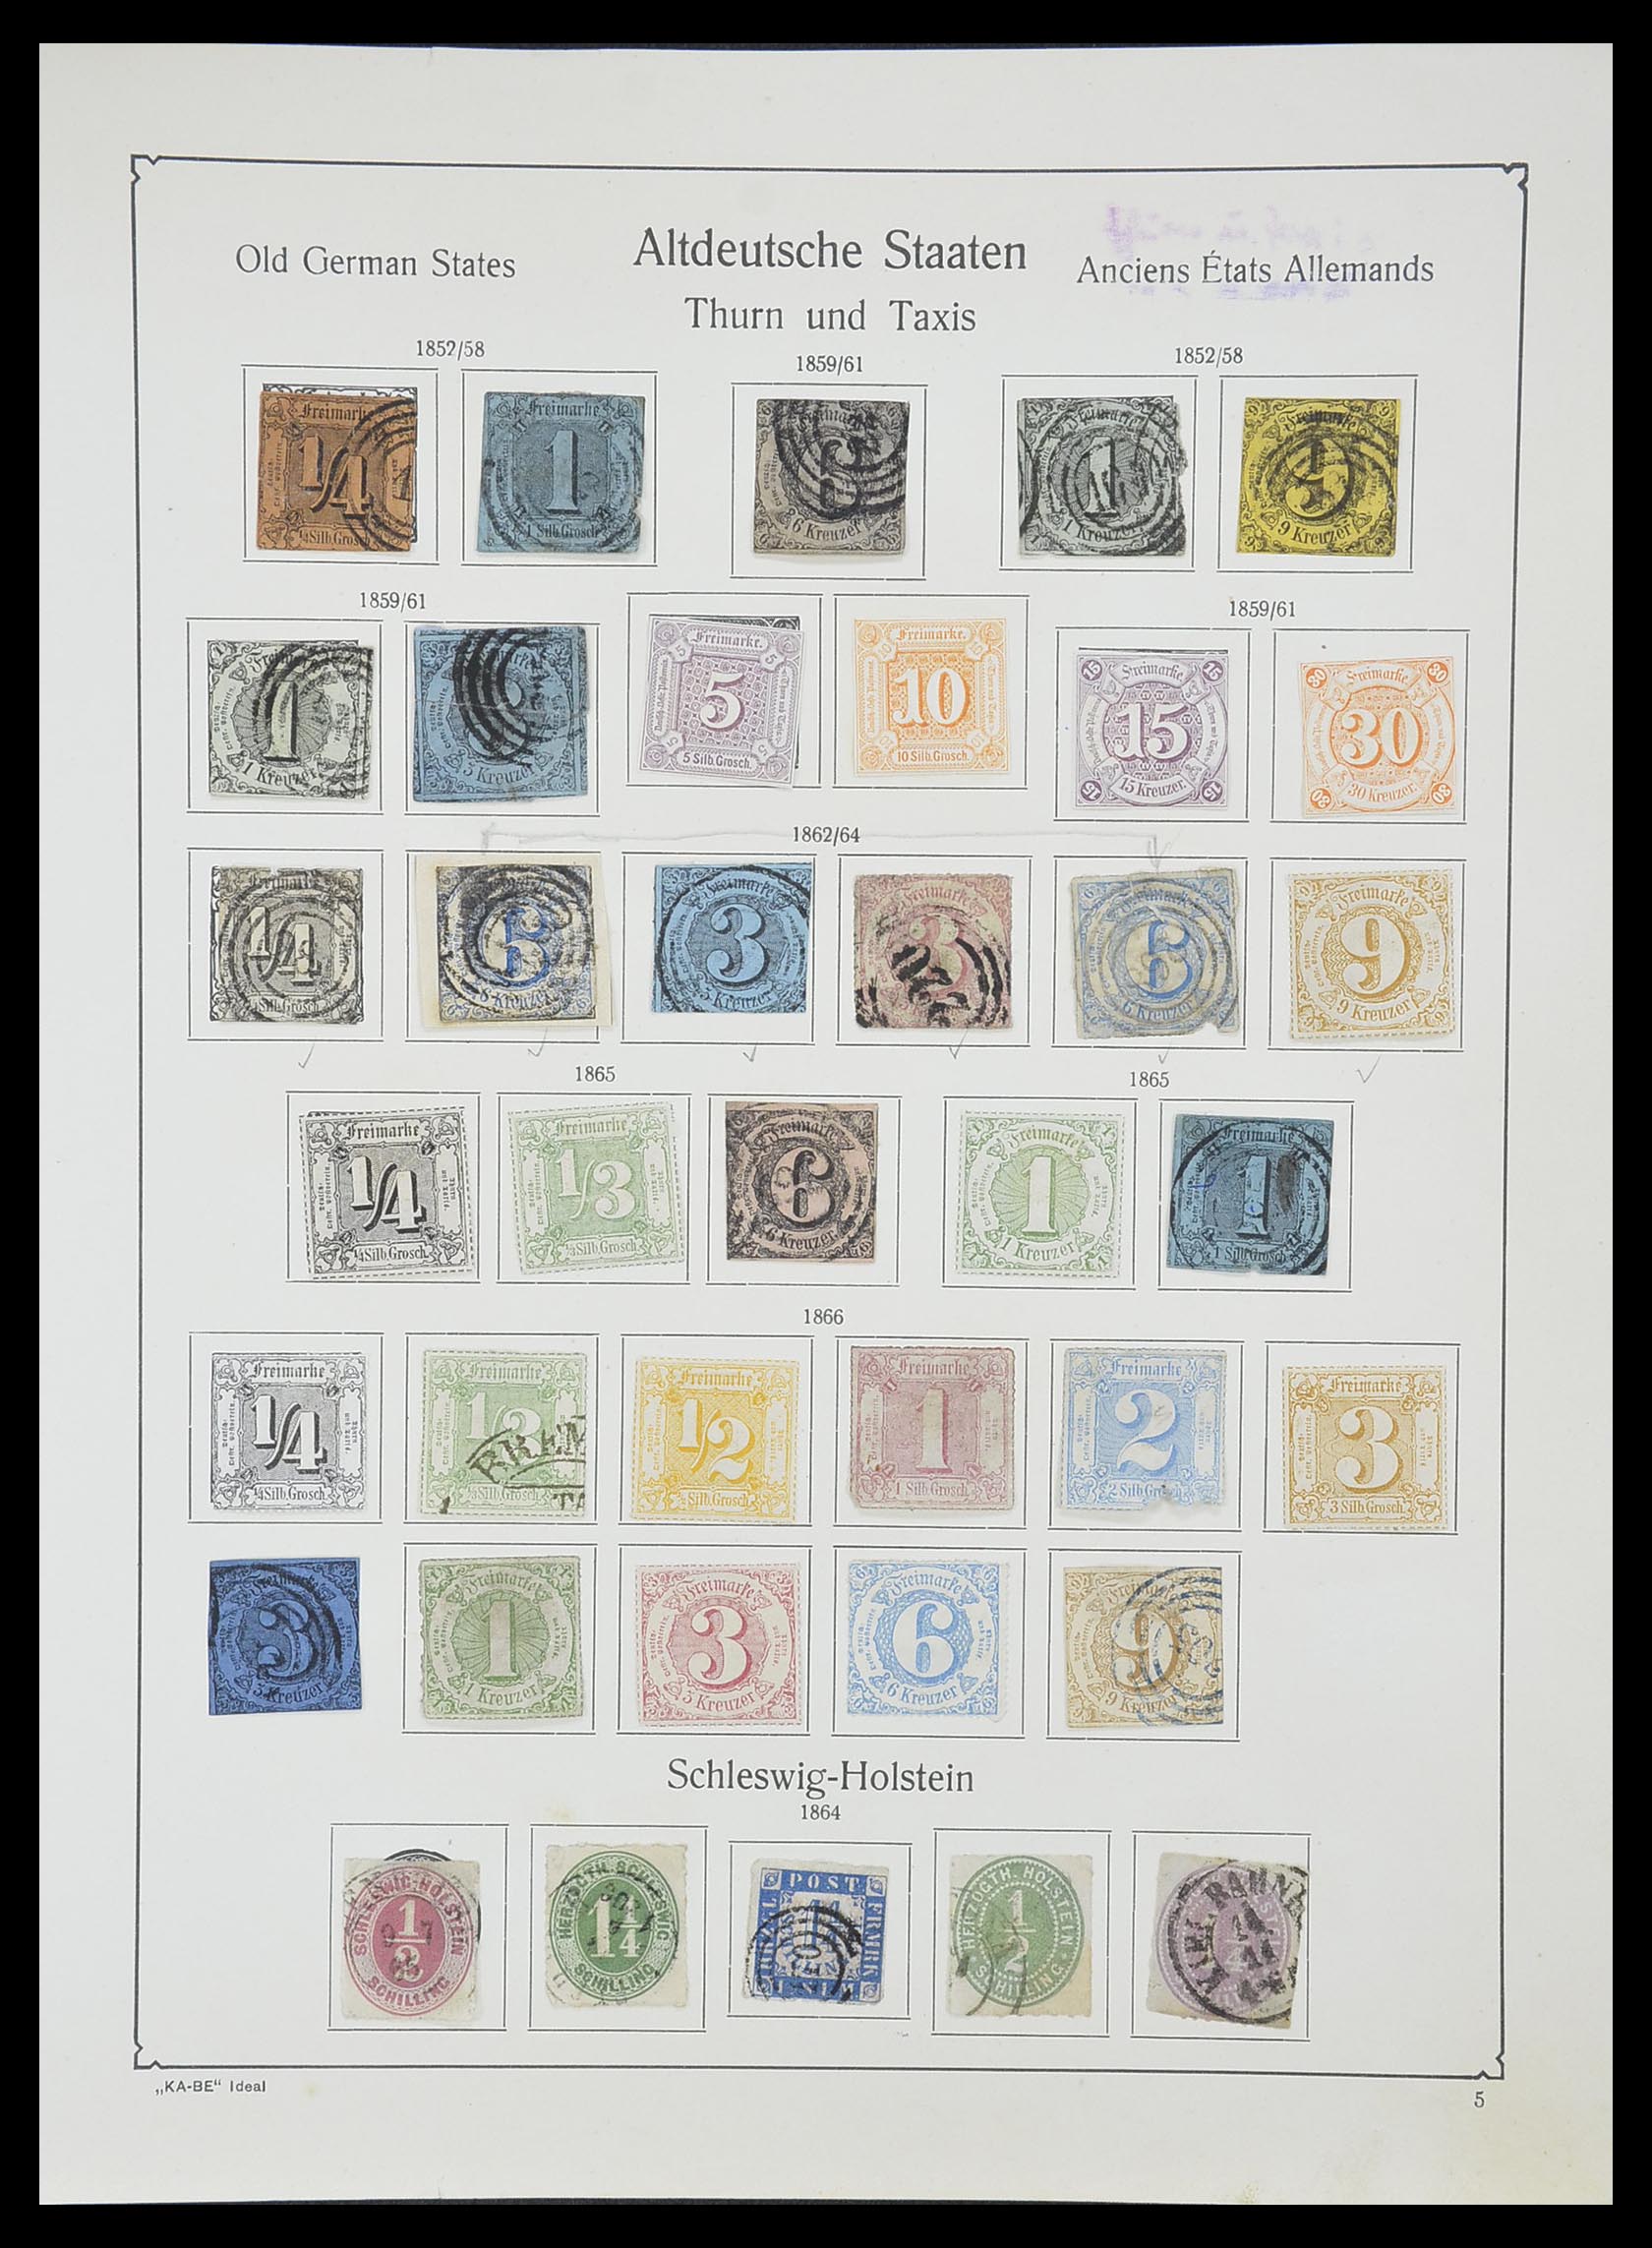 33359 093 - Stamp collection 33359 German Reich 1872-1945.